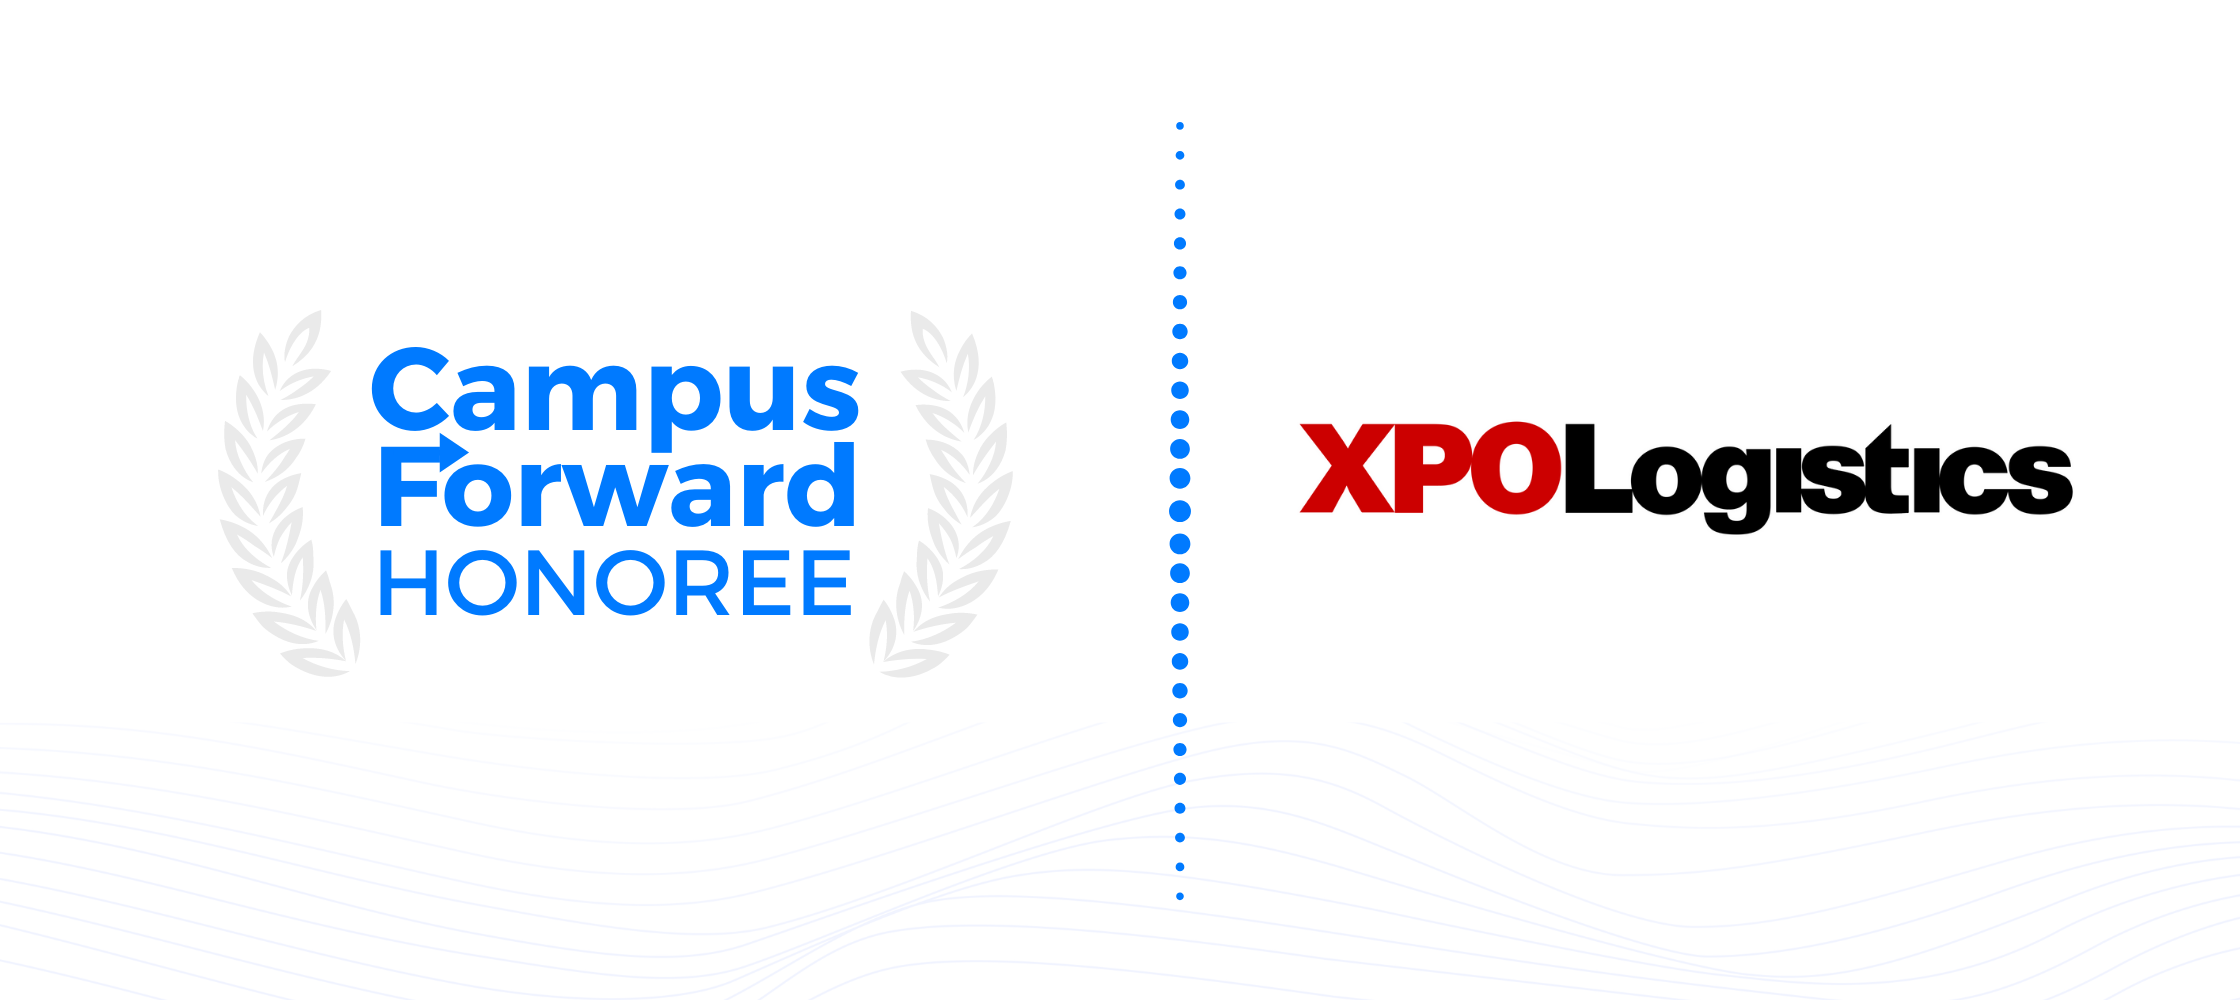 Campus Forward Honoree - XPO Logistics